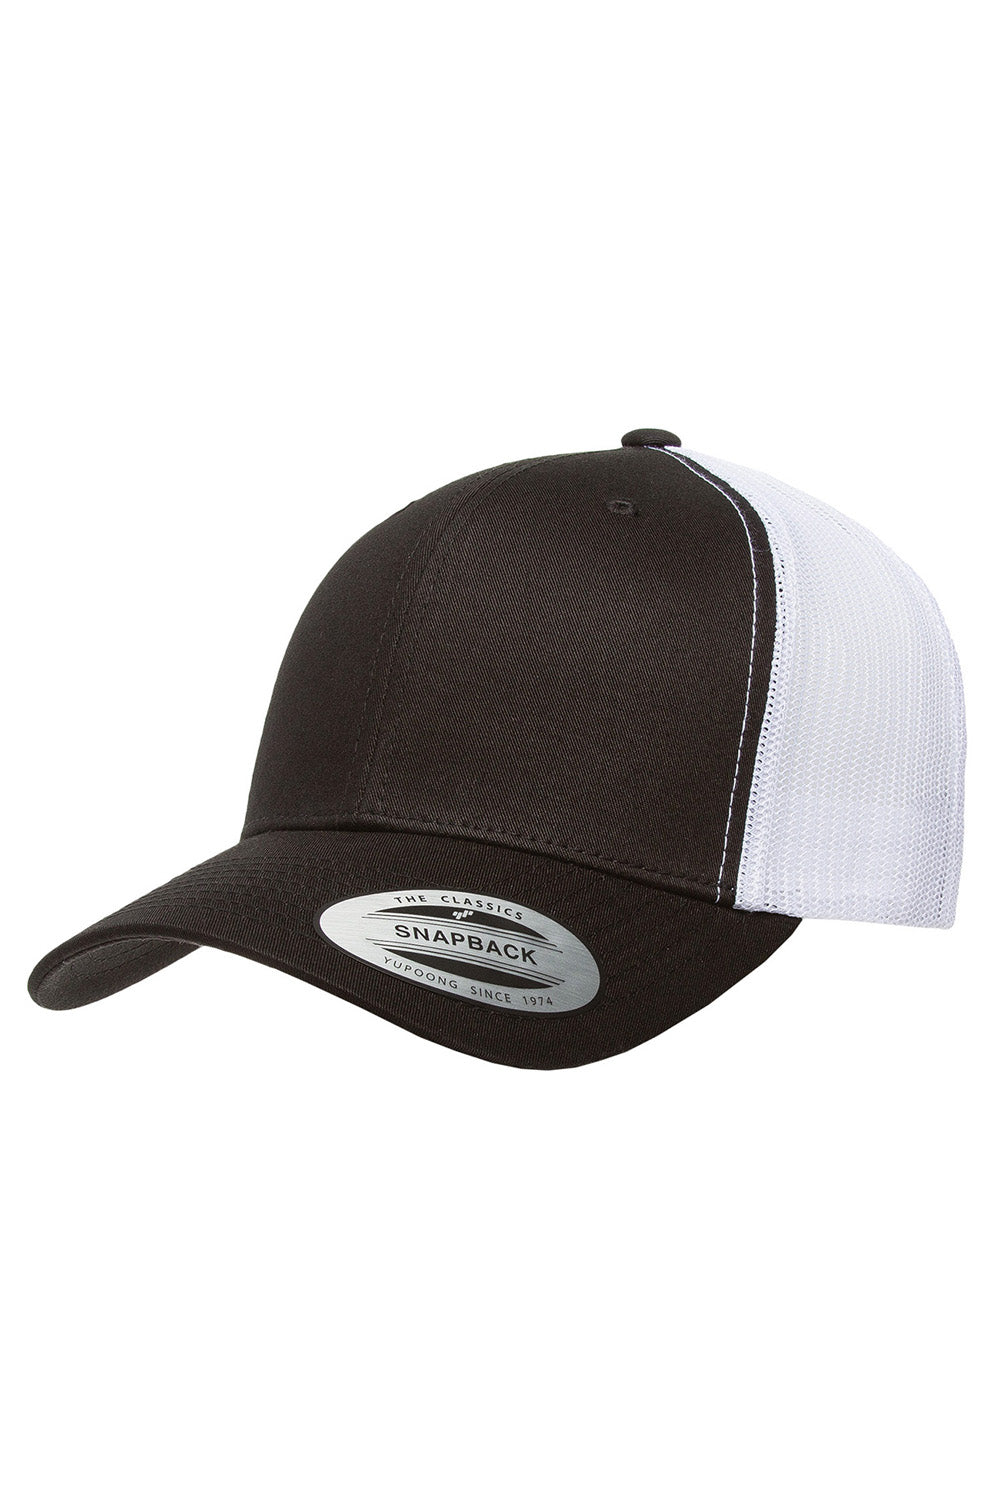 Yupoong 6606 Mens Adjustable Trucker Hat Black/White Front